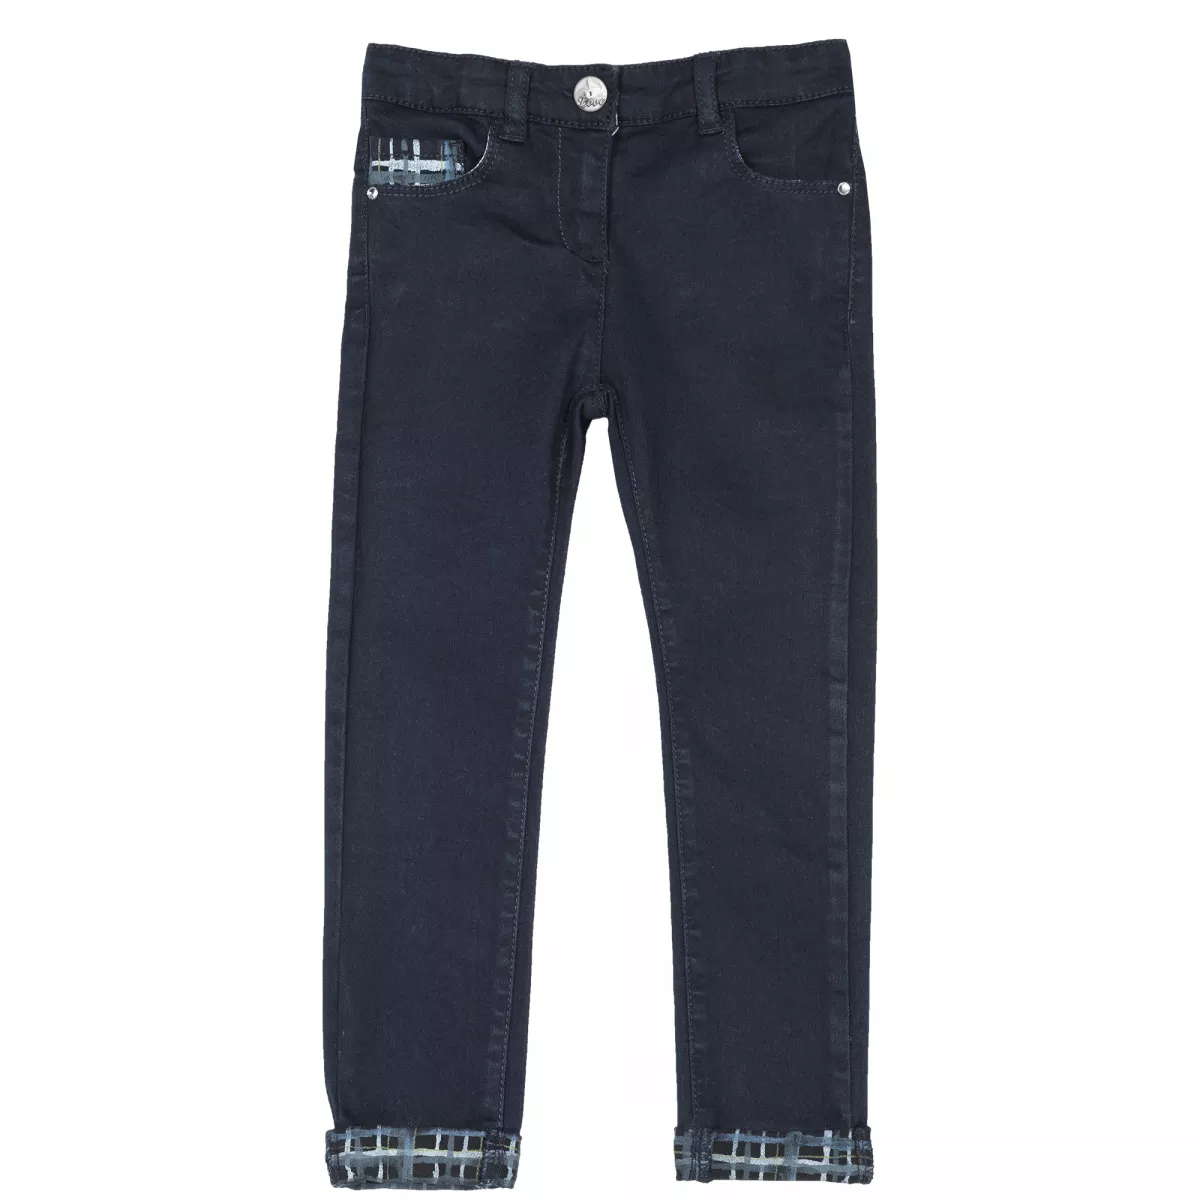 Pantaloni lungi jeans copii Chicco, albastru inchis, 116